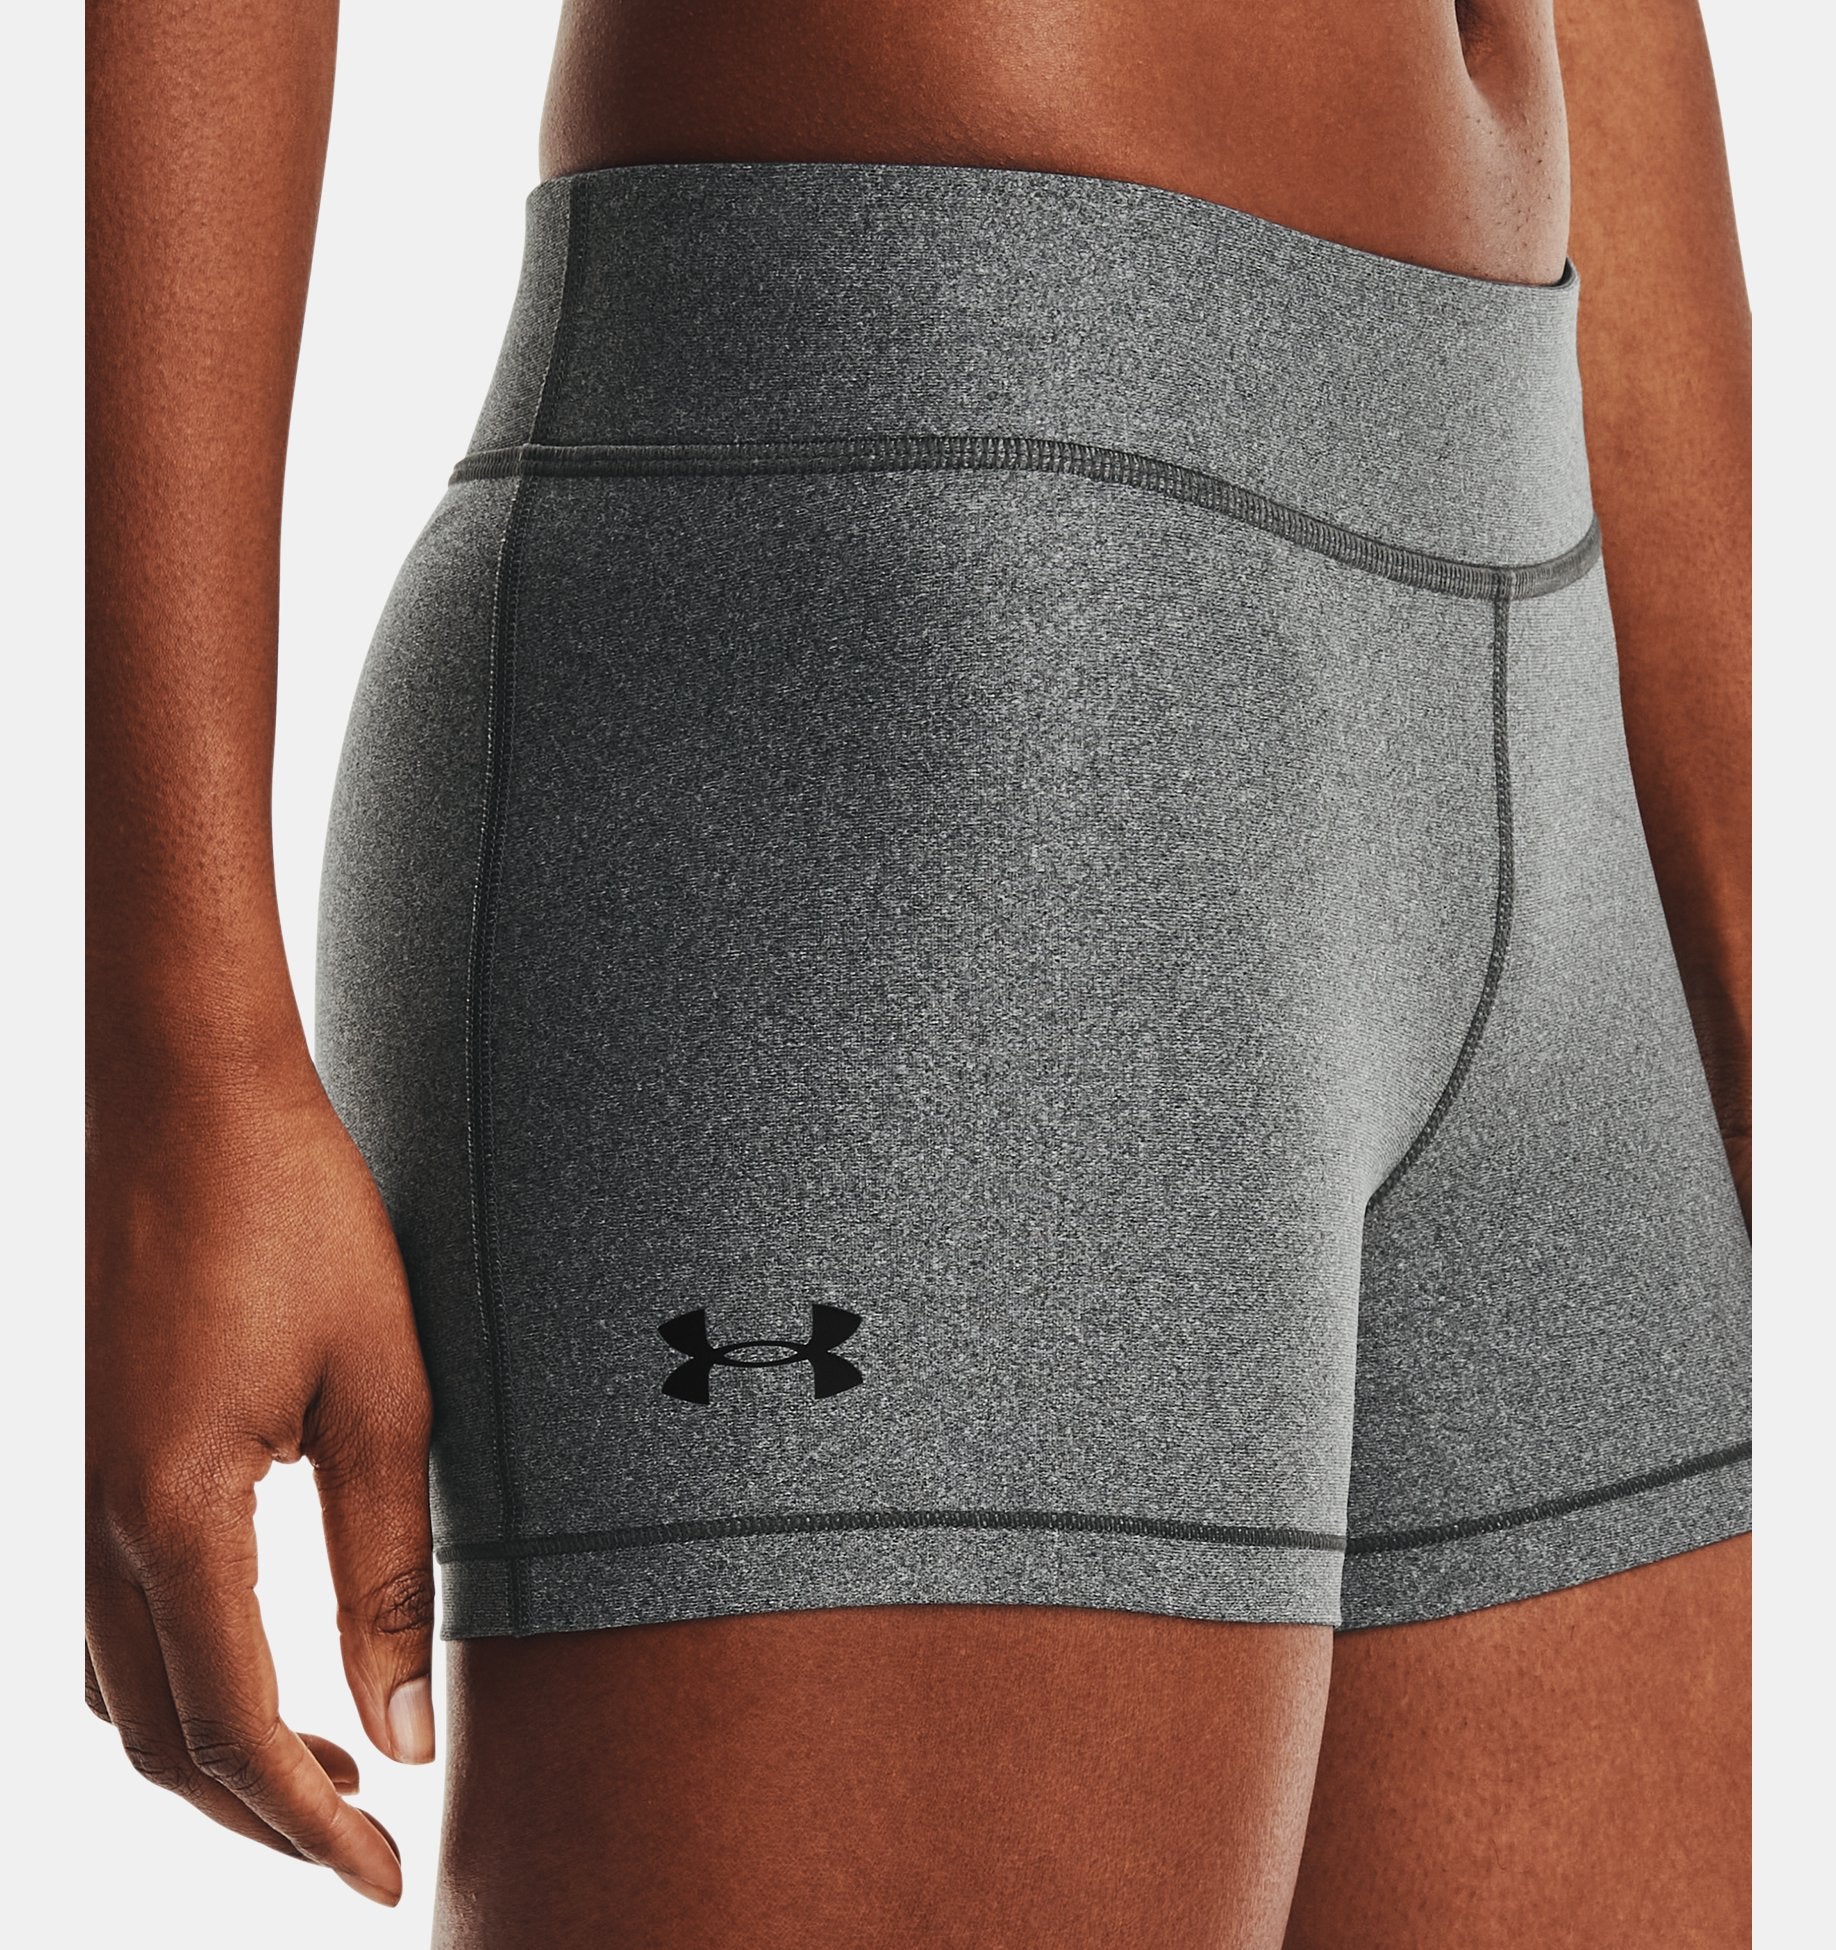 Under Armor Womens Shorts Sz XS Grey Pockets Athletic Short NEW